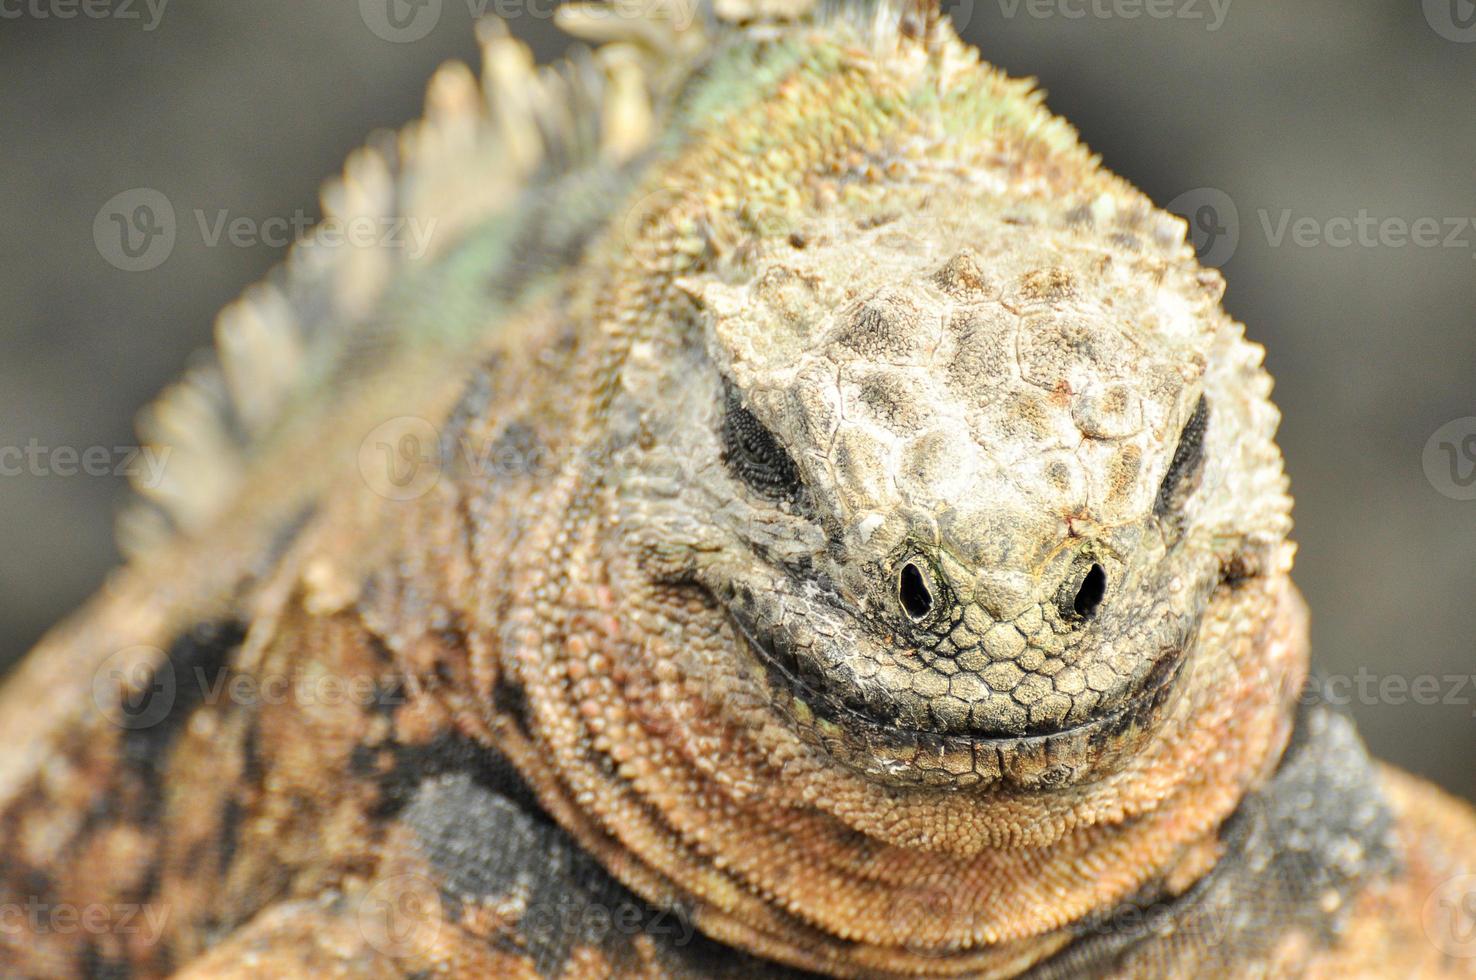 Iguana sonriente, Galápagos, Ecuador foto